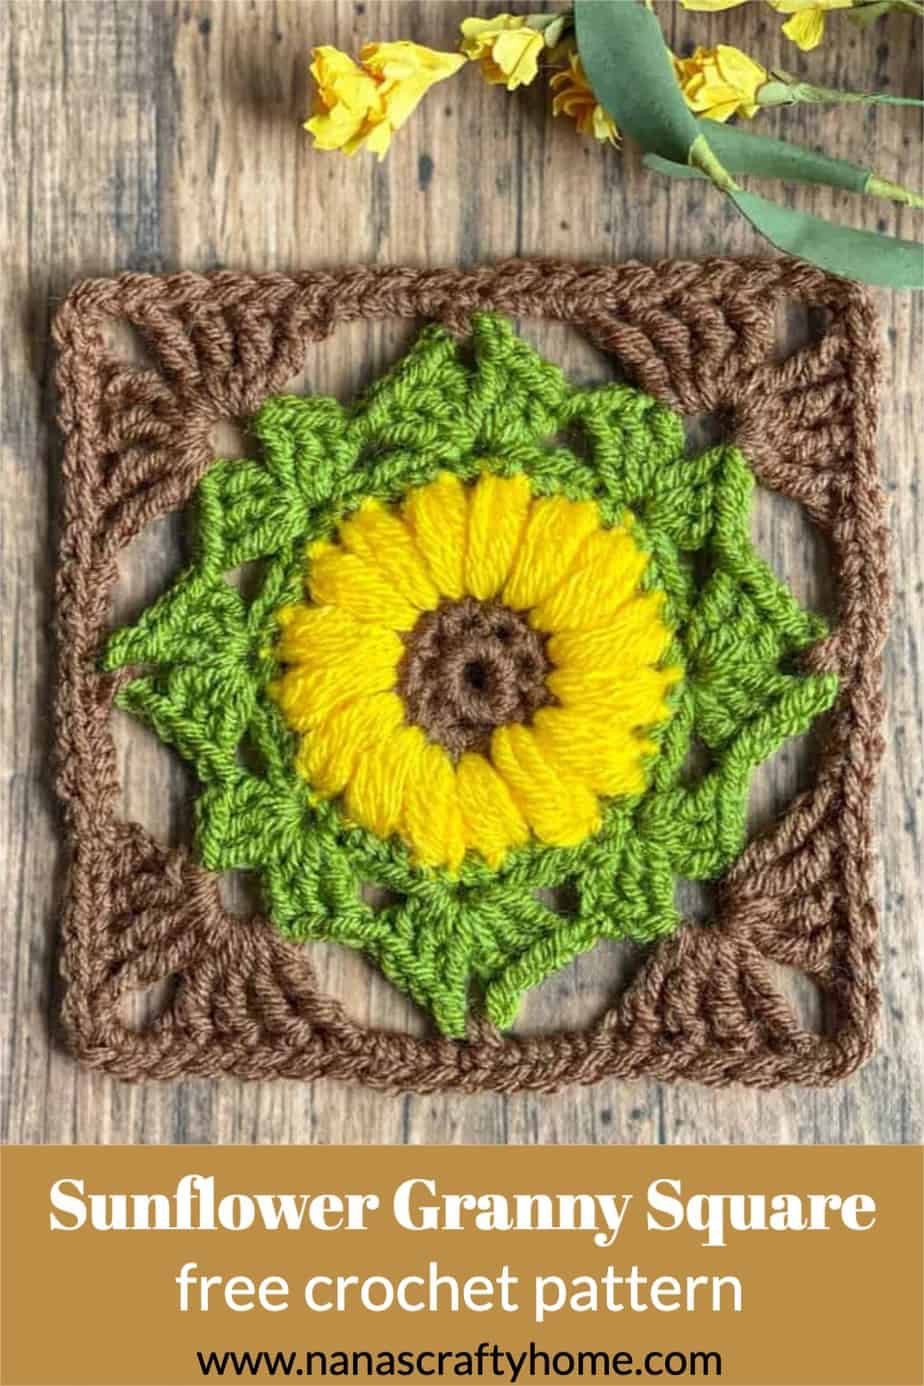 Sunflower Granny square free crochet pattern